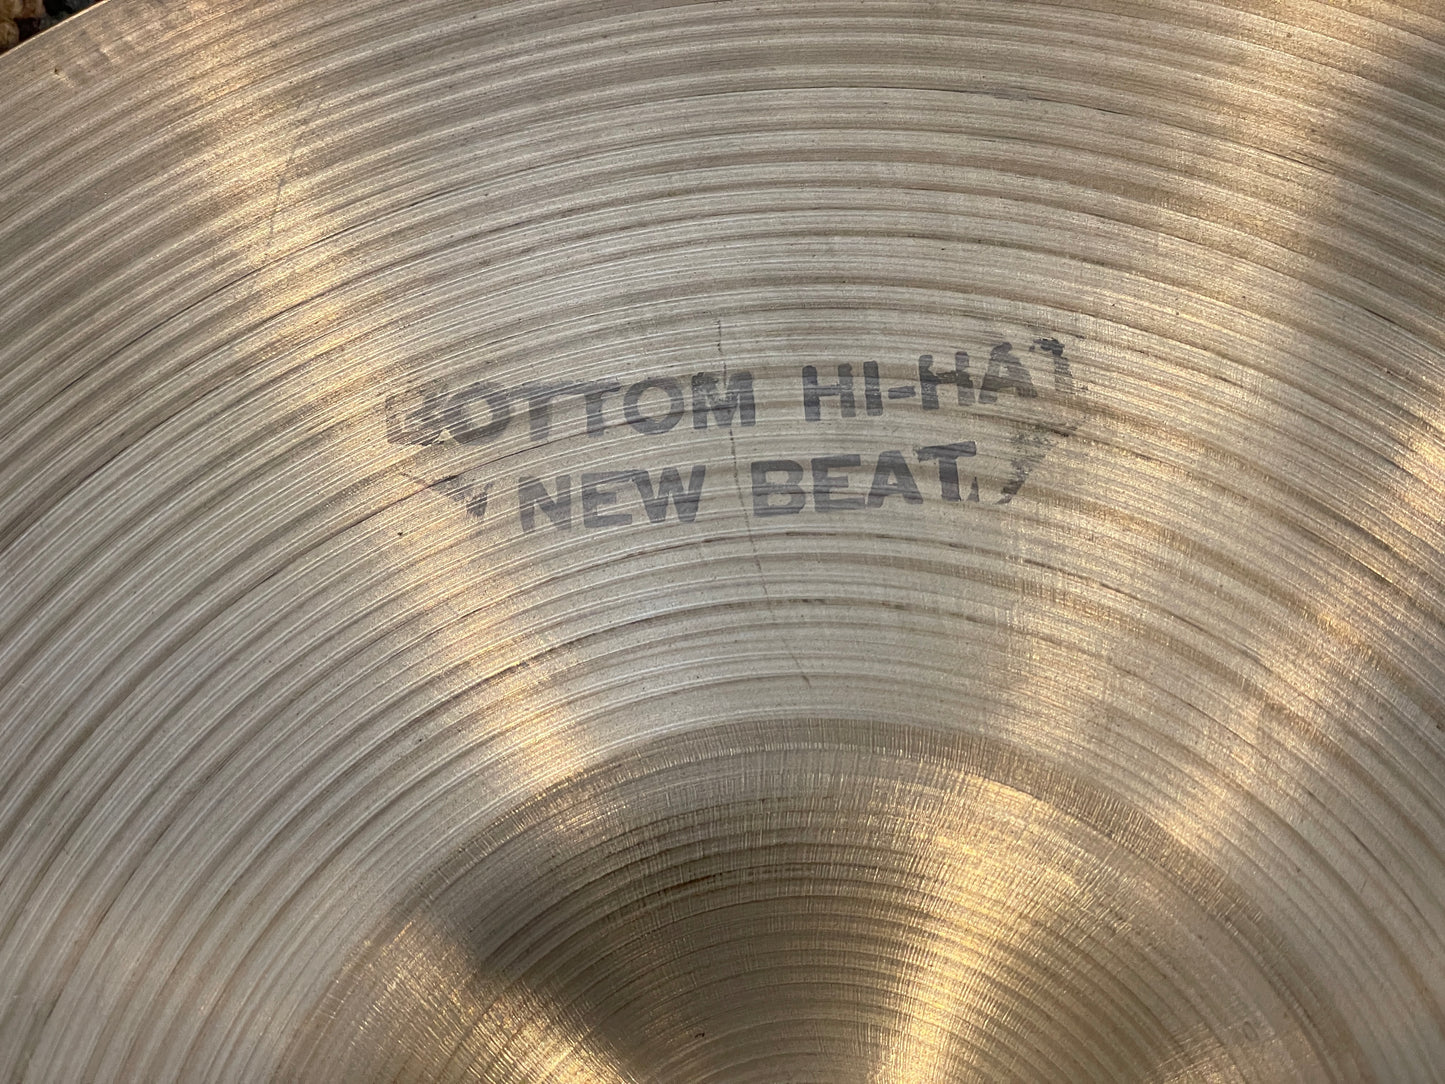 13" Zildjian A 1970s New Beat Hi-Hat Cymbal Pair 724g/1212g #873